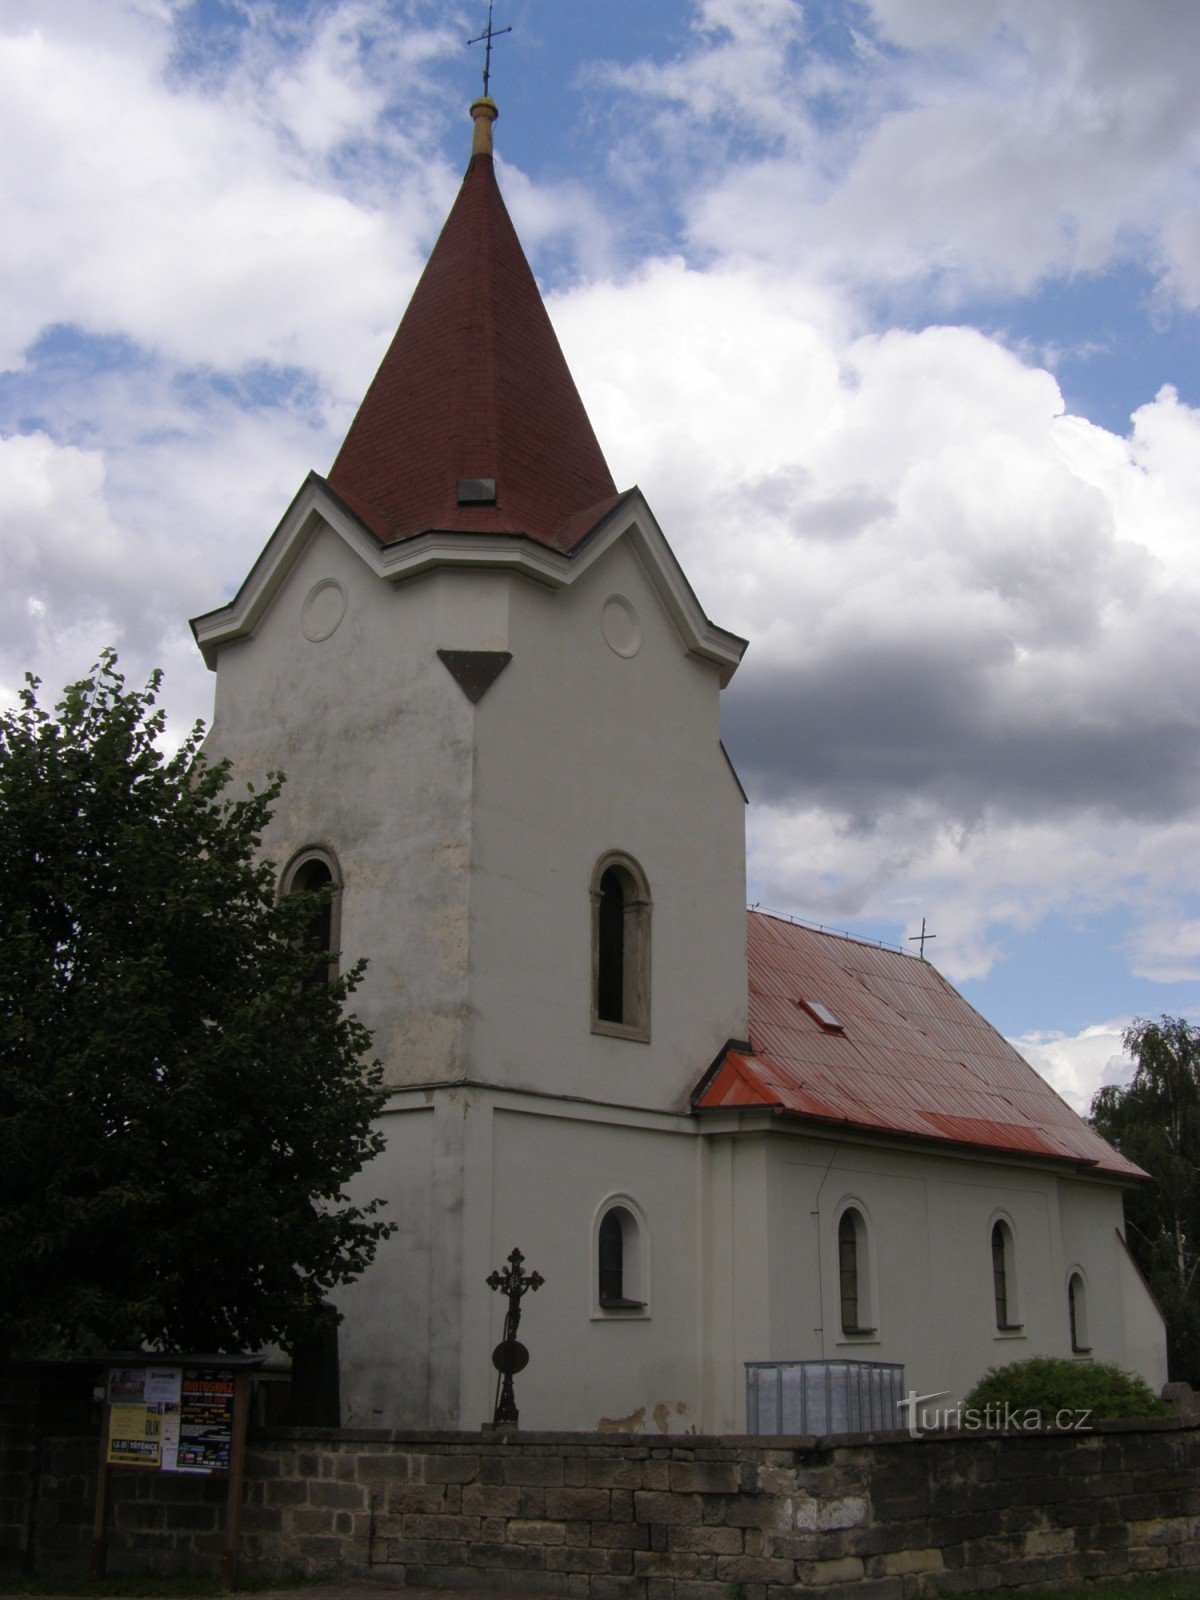 Orașul vechi - Biserica Sf. Francisc